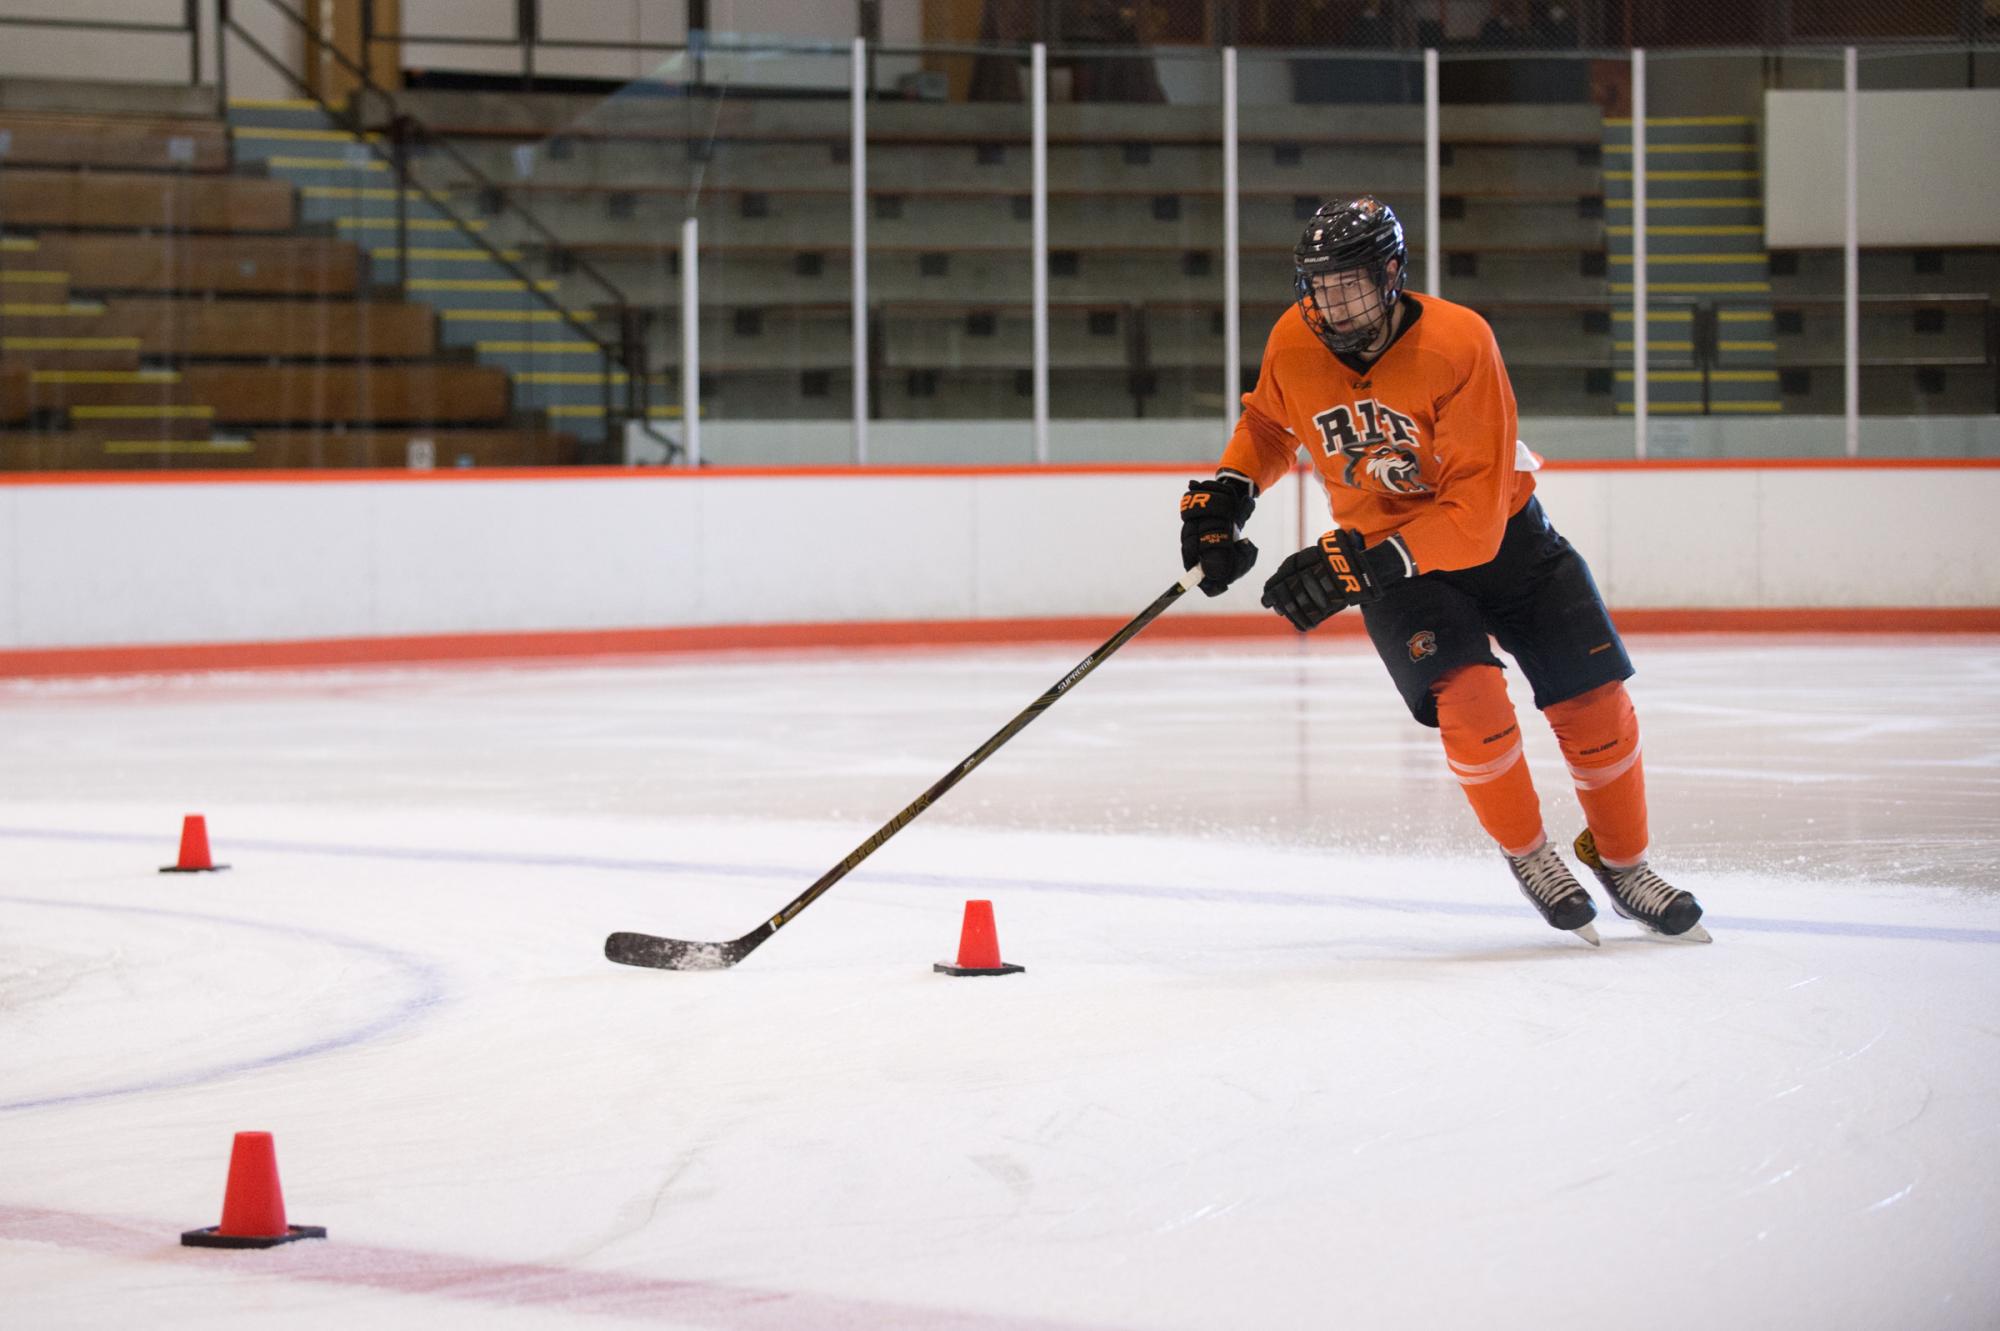 Men's hockey defenseman, Adam Brubacher, practices at the Ritter Ice Arena in Henrietta, N.Y. on March 29, 2017.